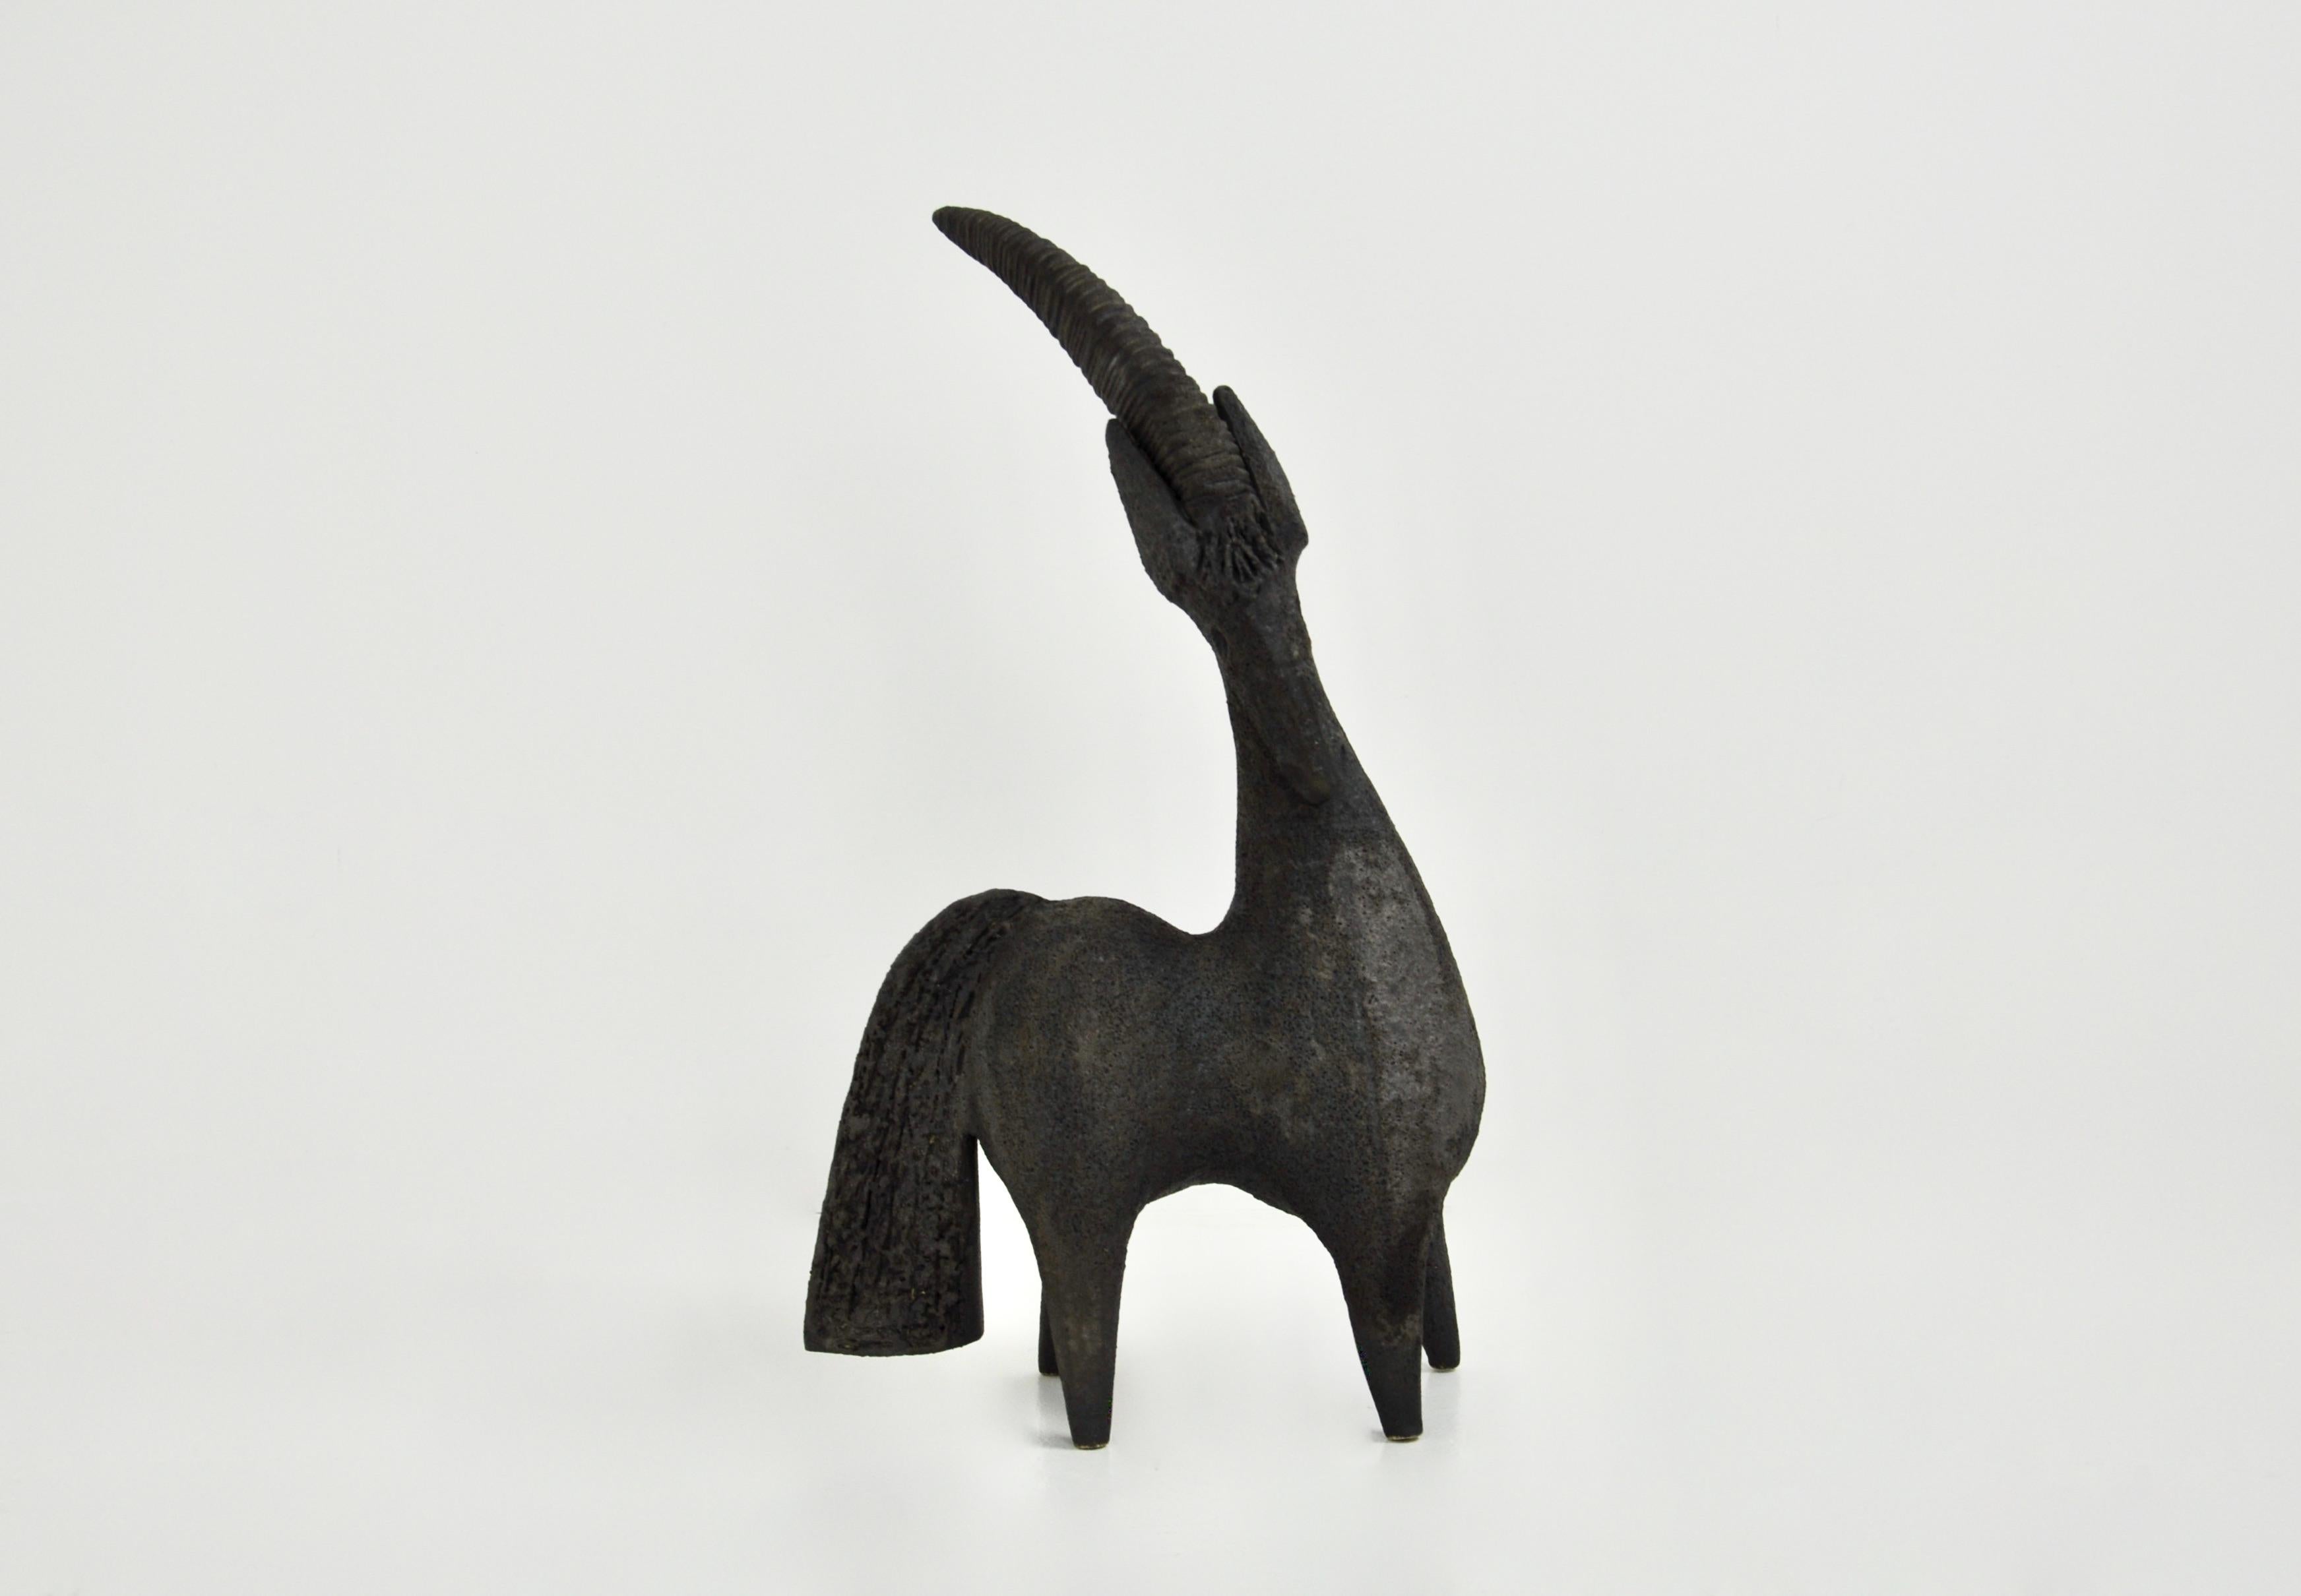 Ceramic in the shape of a unicorn by Dominique Pouchain.